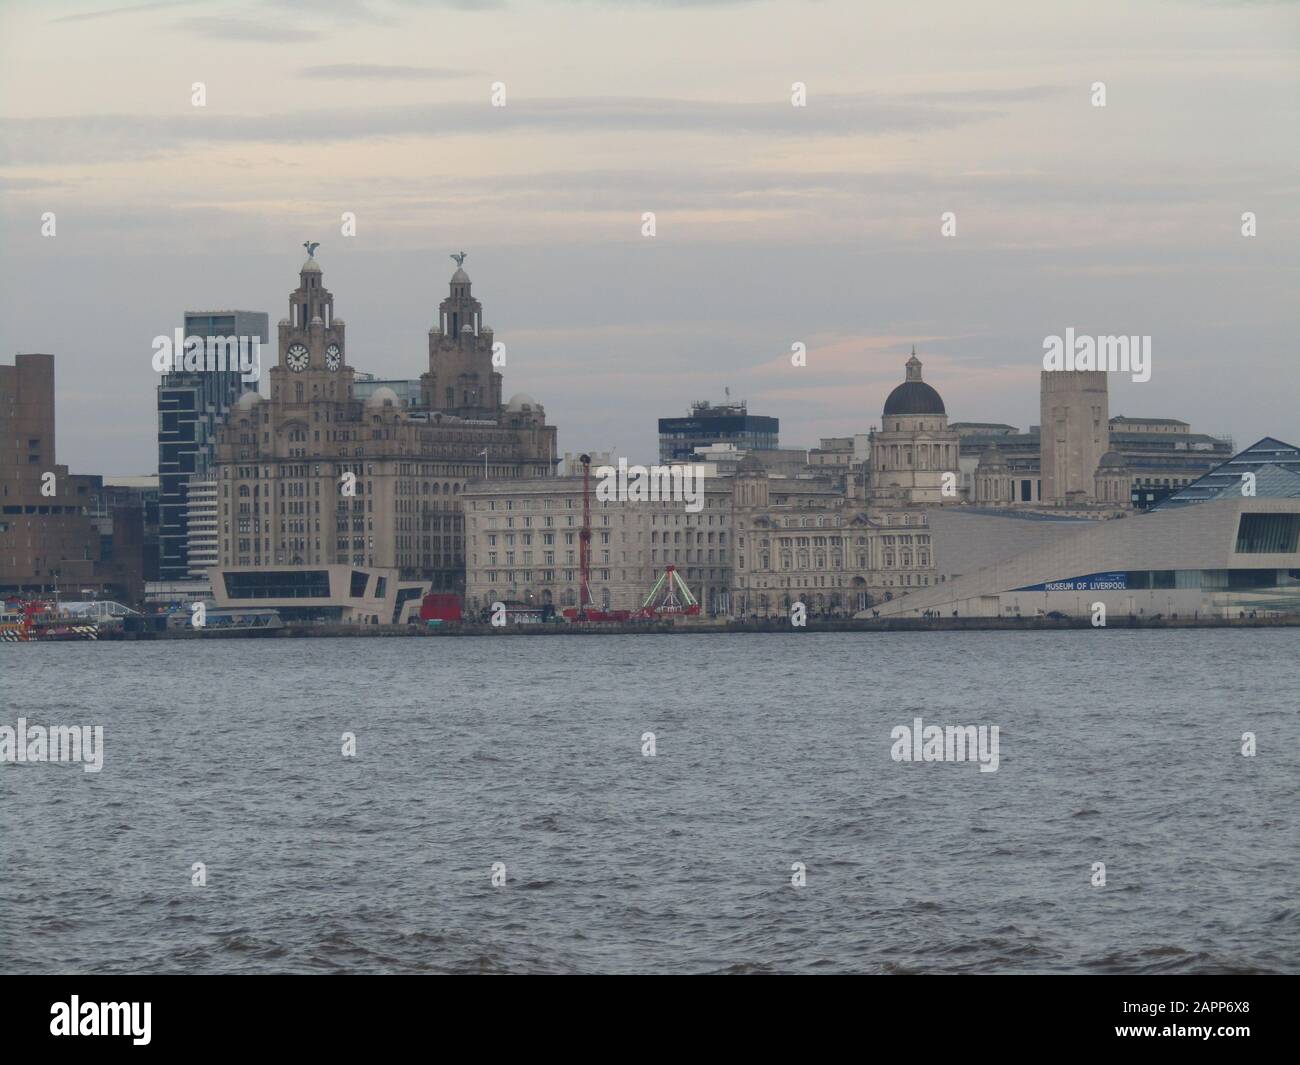 Liverpool, Boote und Gebäude von Liverpool Credit Ian Fairbrother/Alamy Stock Photos Stockfoto